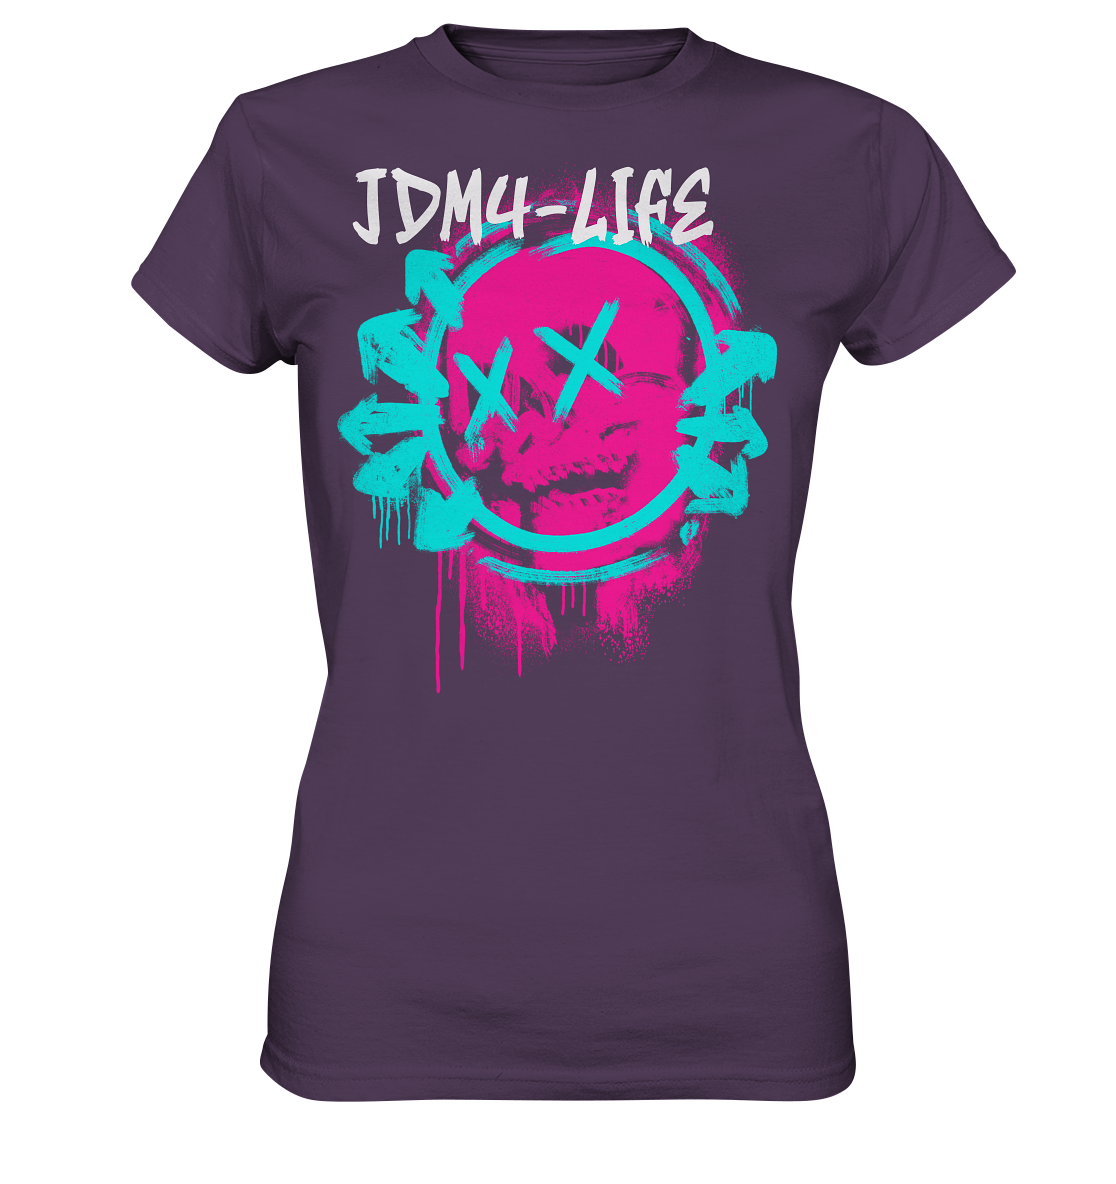 JDM4-LIFE Graffiti - Ladies Premium Shirt